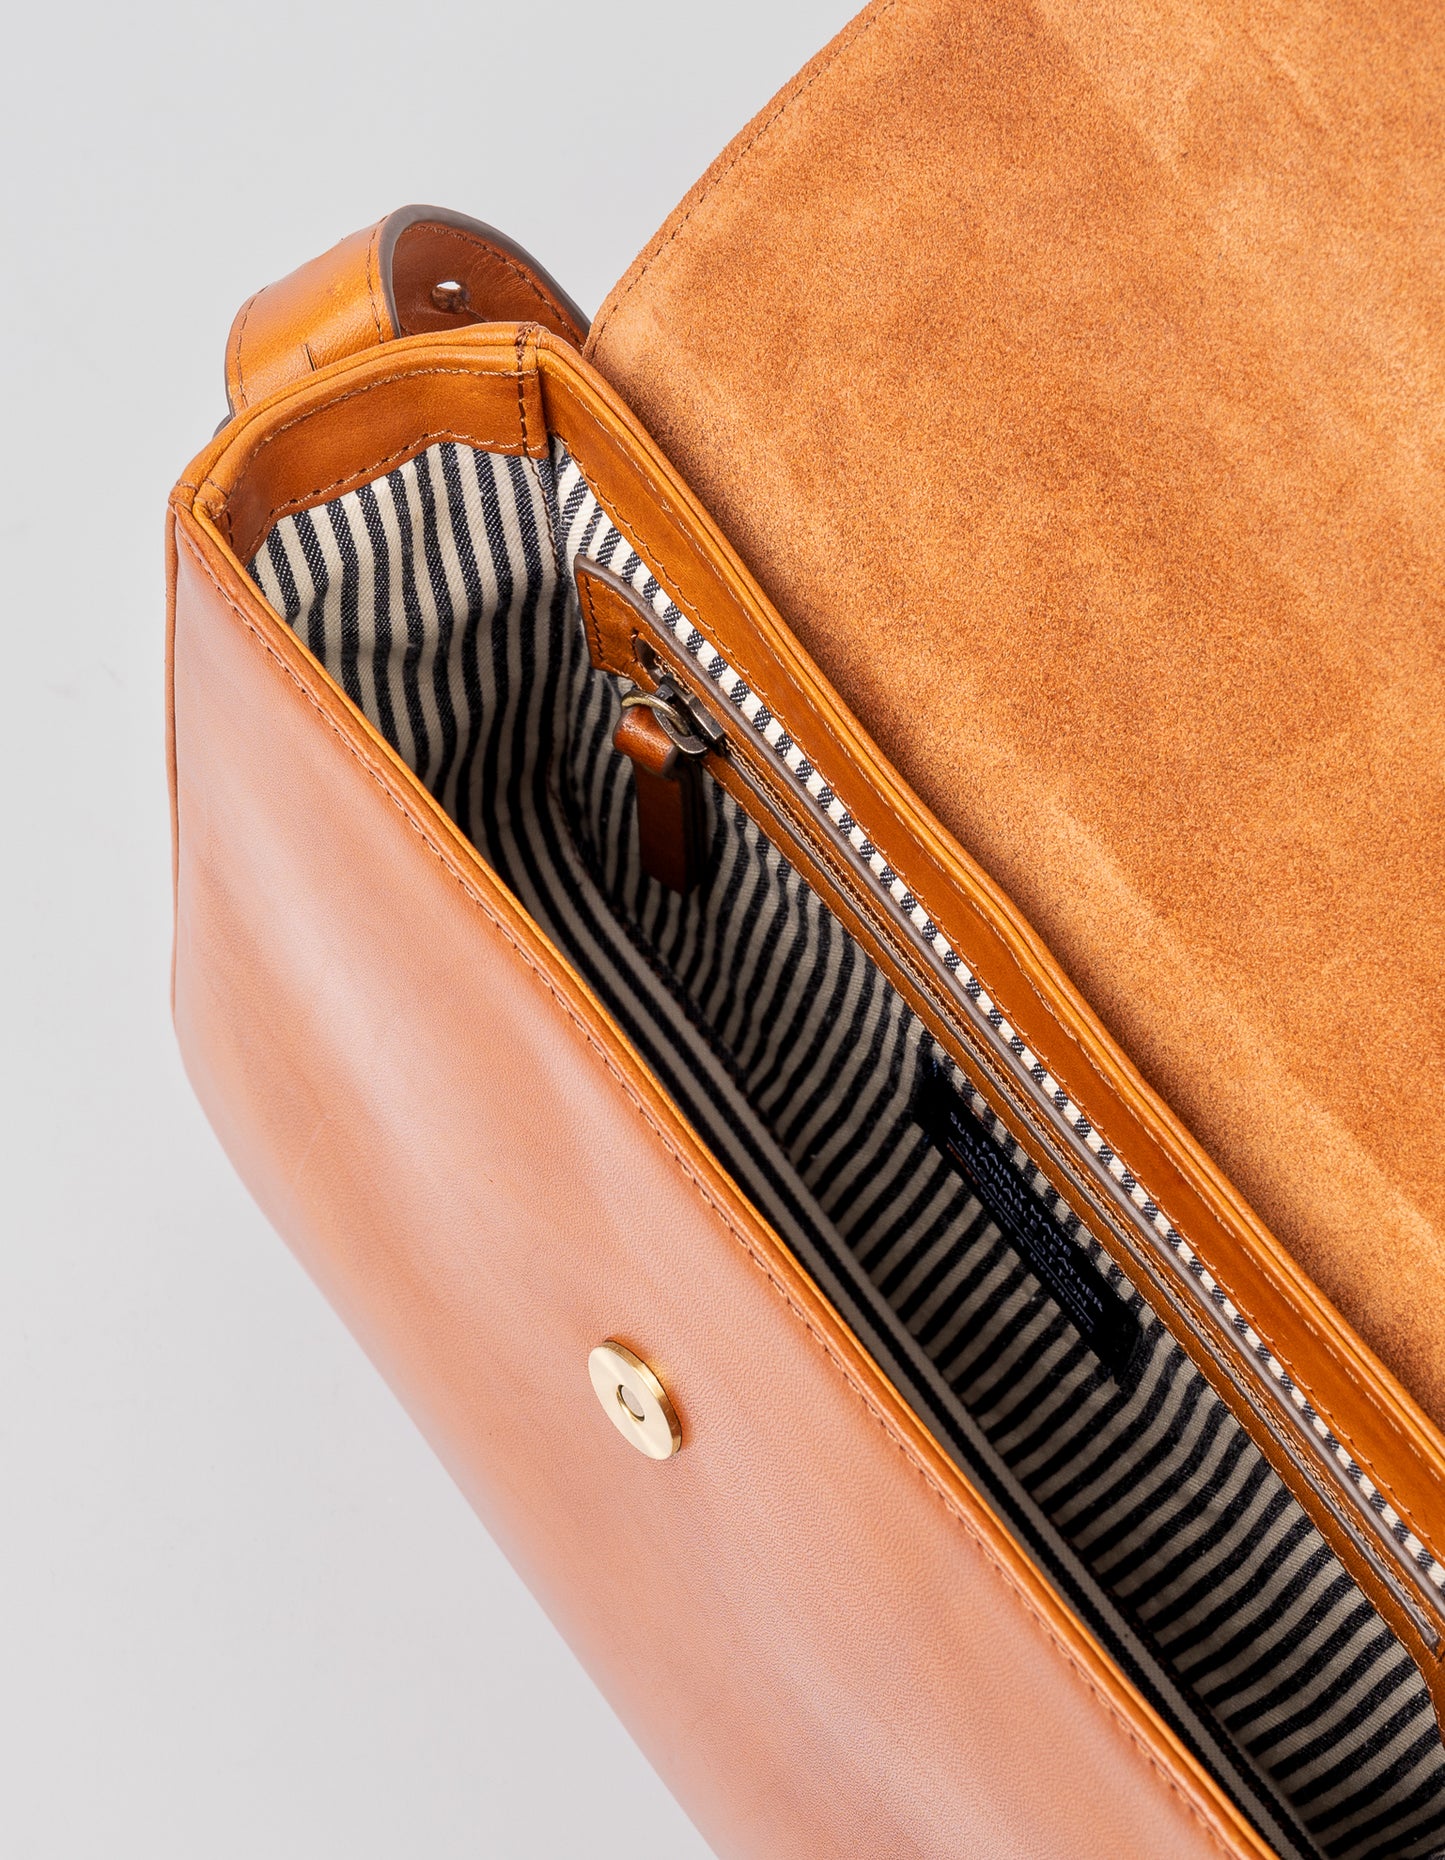 
                  
                    GINA Cognac Classic Leather Bag
                  
                